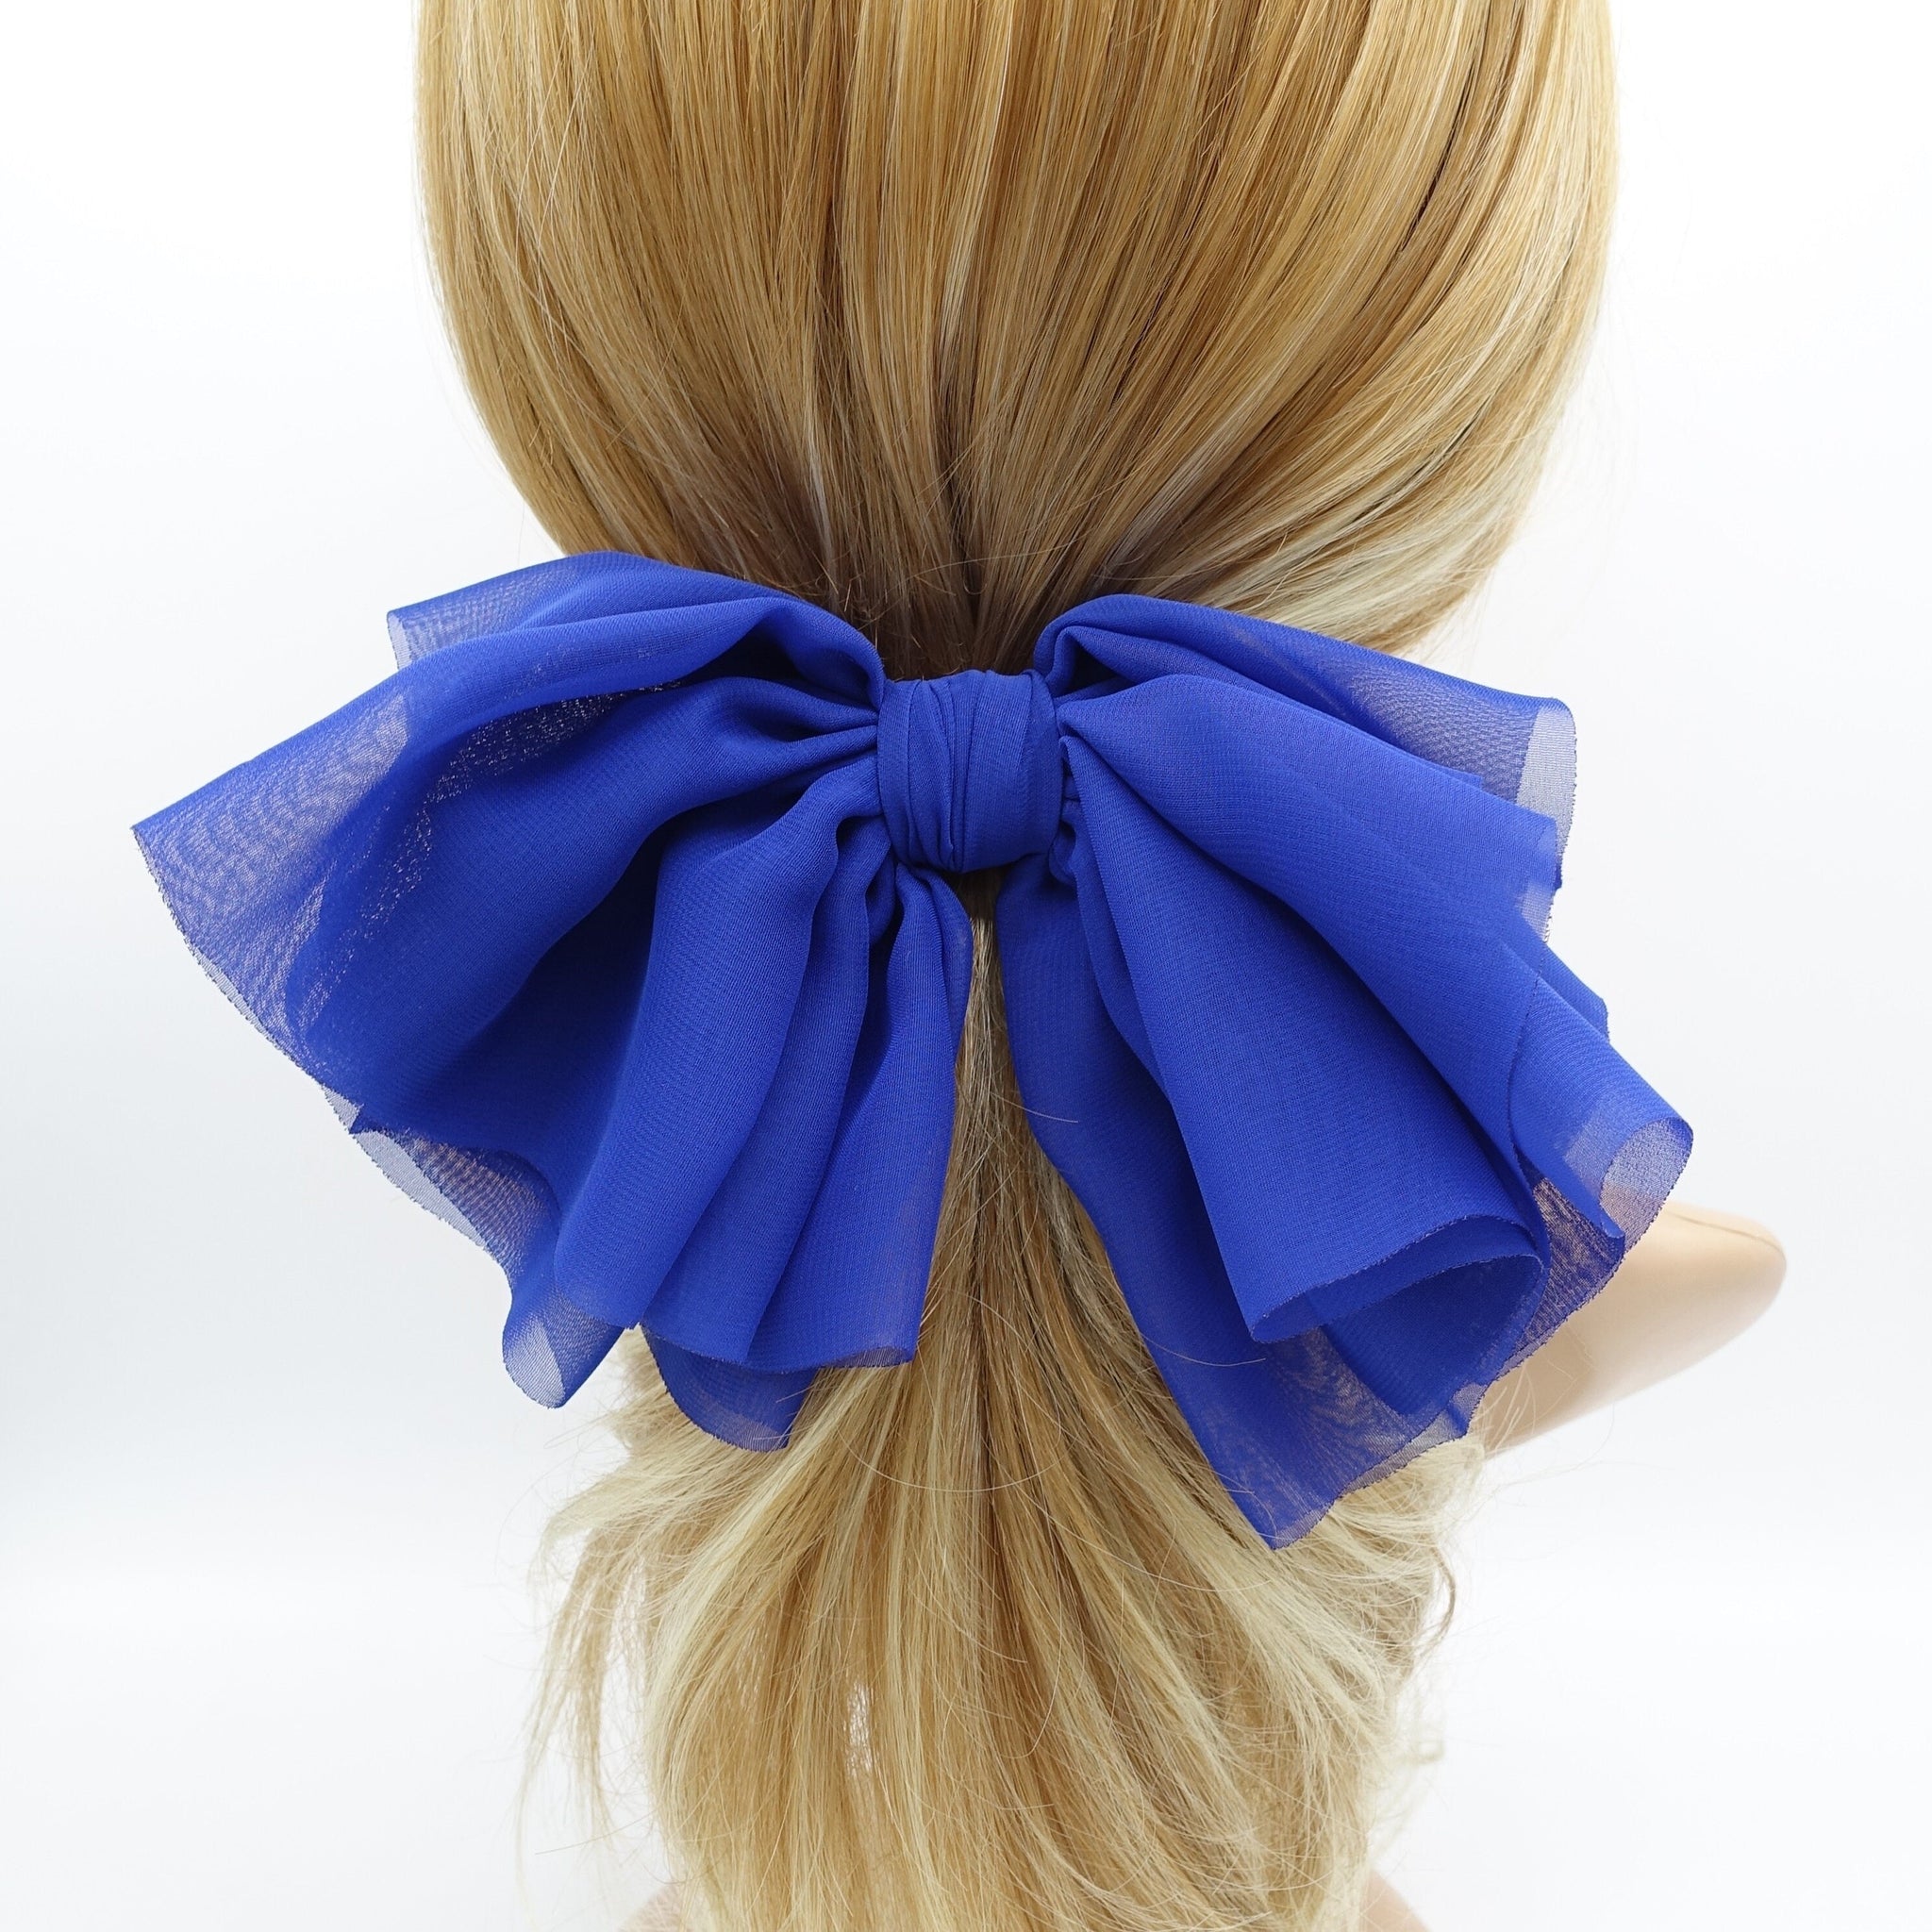 veryshine.com Barrette (Bow) Blue large chiffon hair bow multi-layered hair bow for women